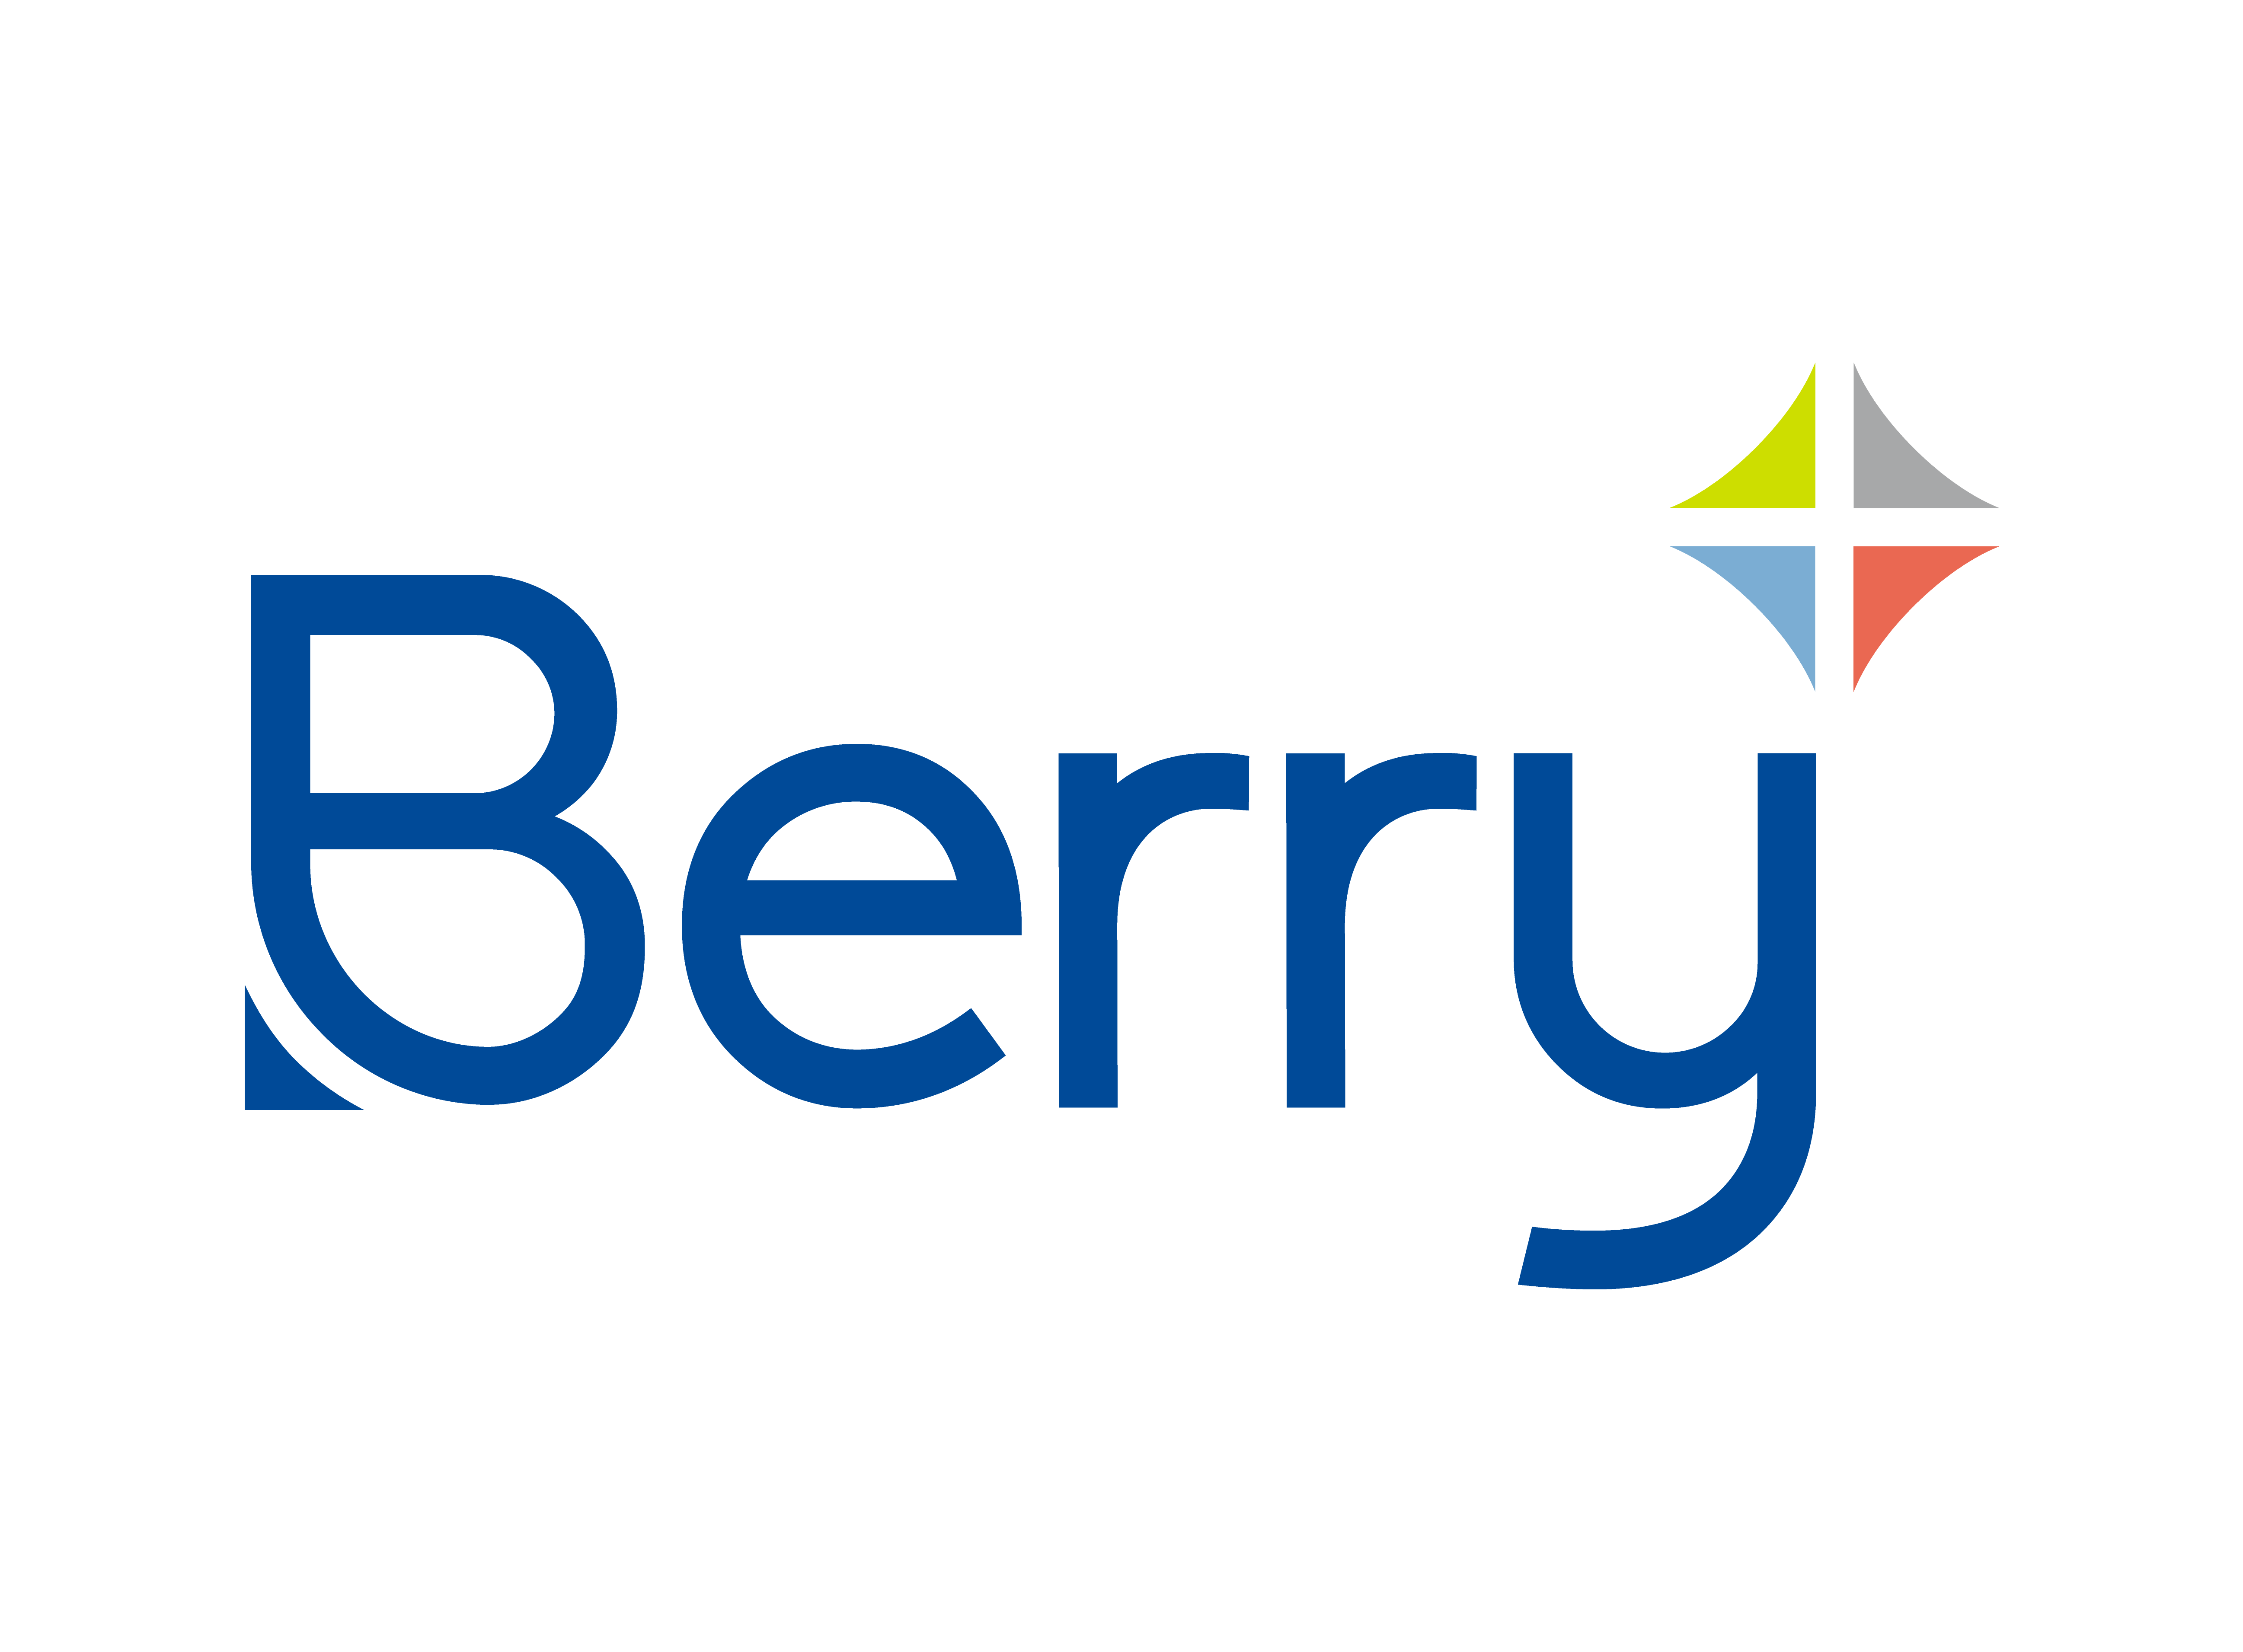 Berry Global